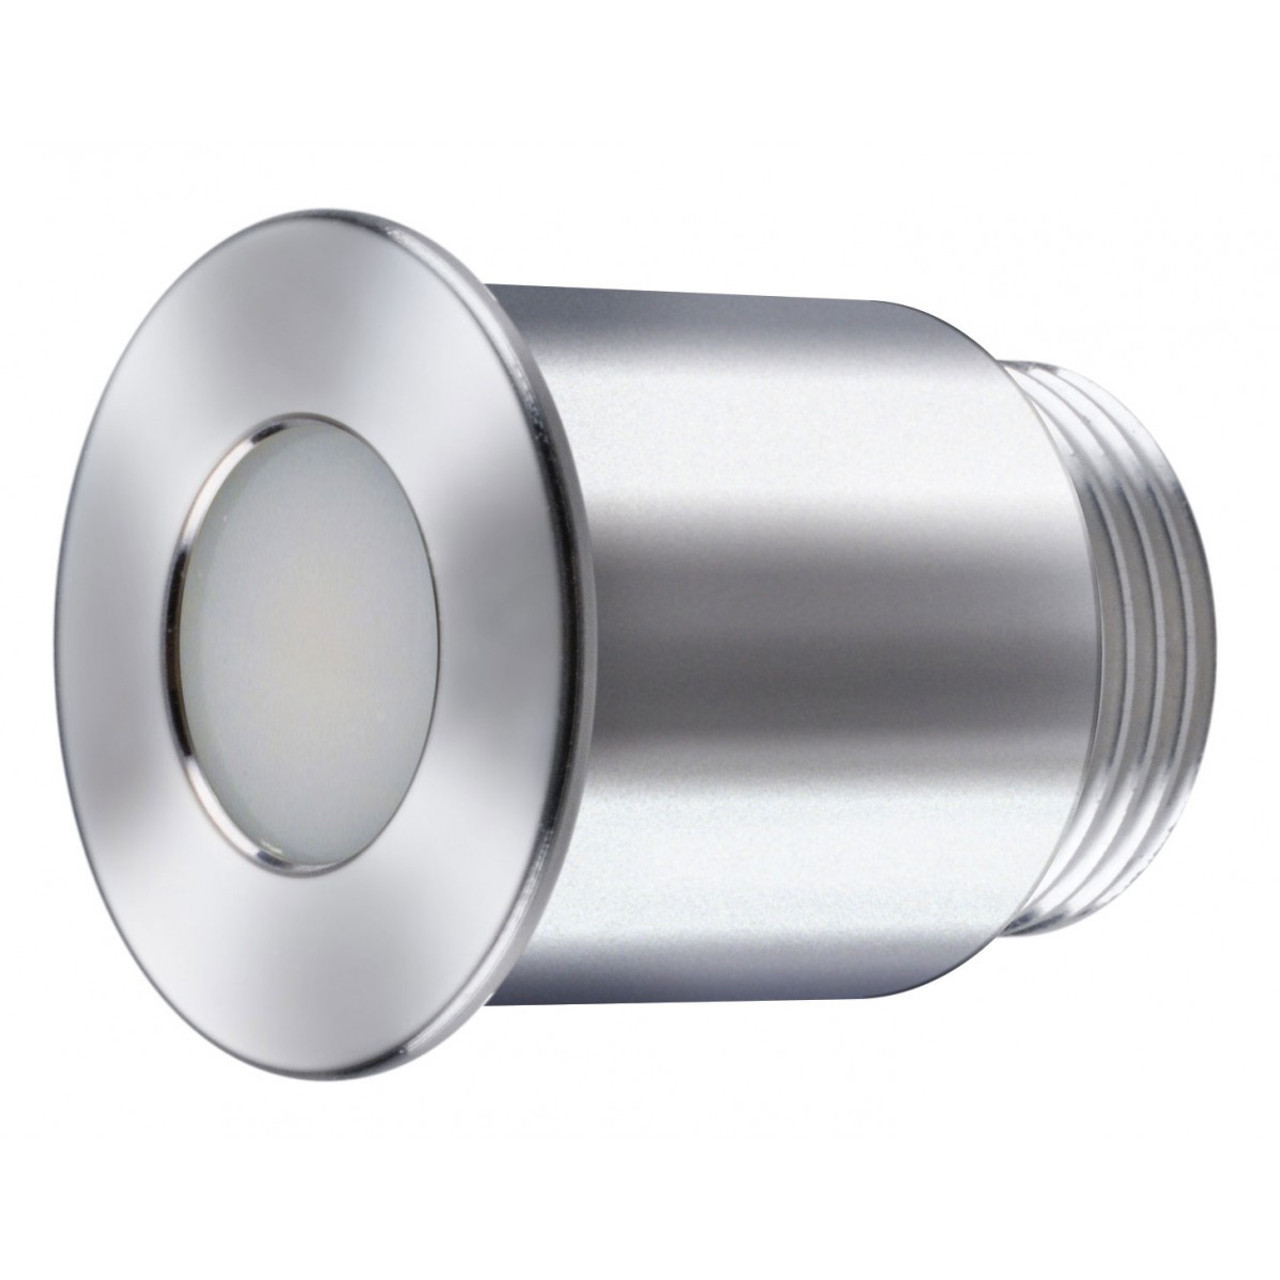 Quick Marine - Gaia CO36 LED Courtesy Light (Daylight, 10/30V, IP65, Stainless Steel) (FASP2390X11CD00) - Apollo Lighting